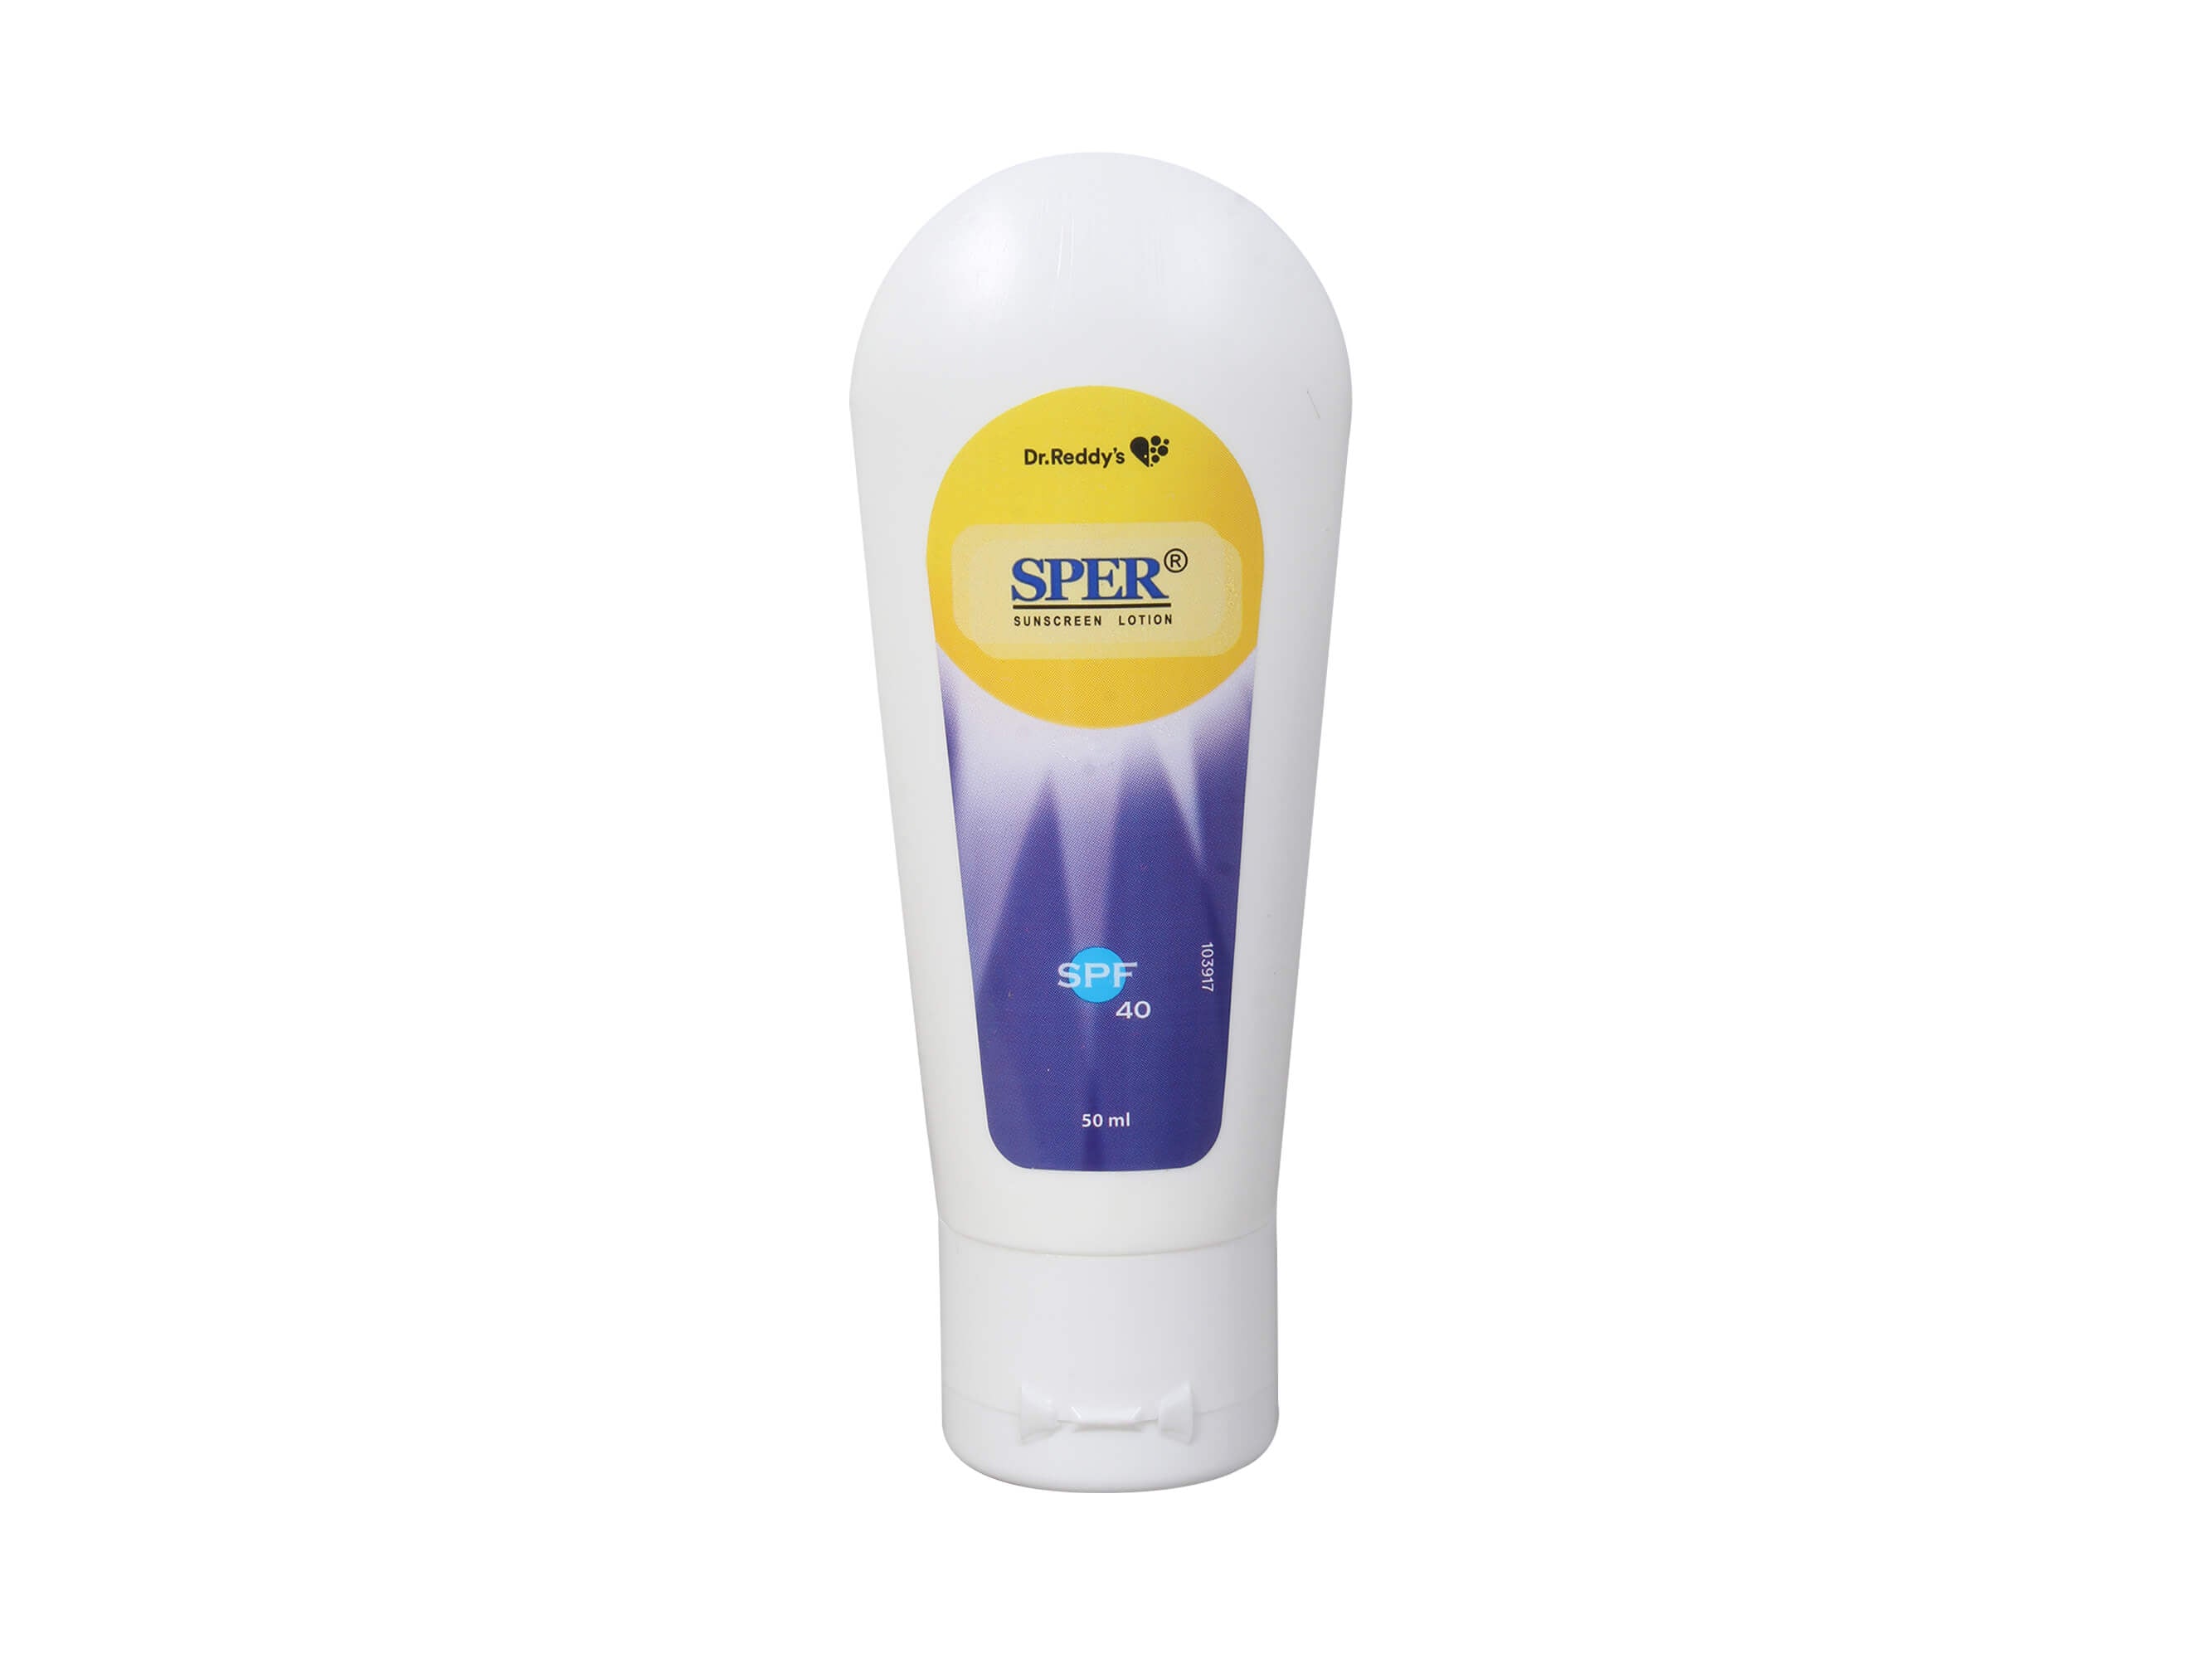 Sper Sunscreen SPF 40 Lotion - Clinikally